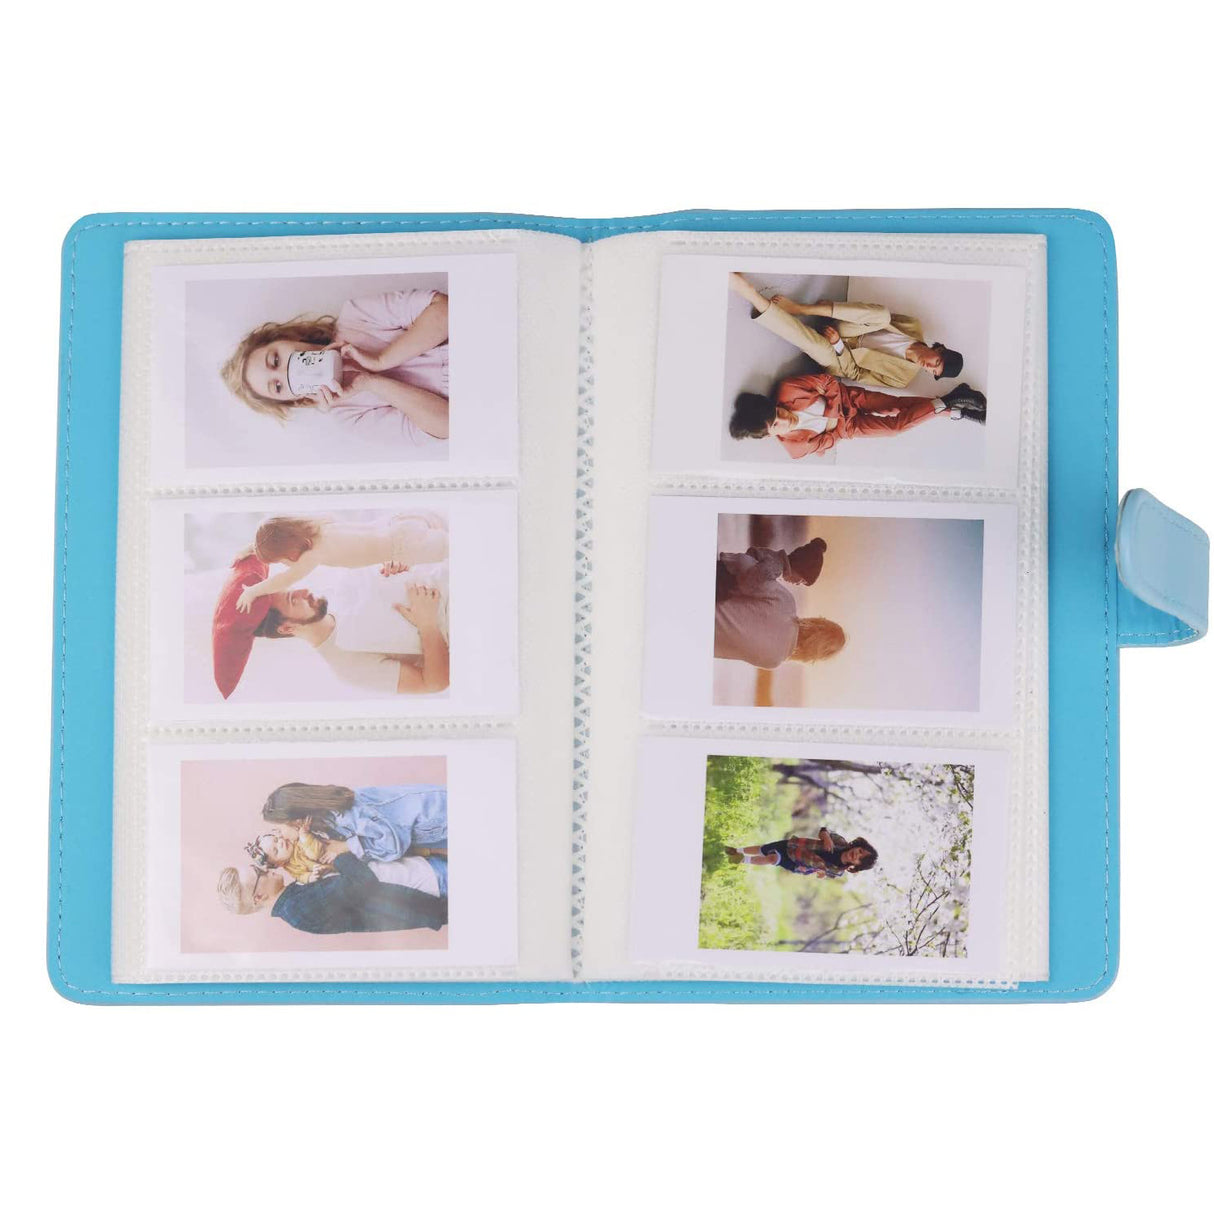 Fujifilm Instax Mini 4 Pack 10 Sheets Instant Film with 96-sheet Album for mini film